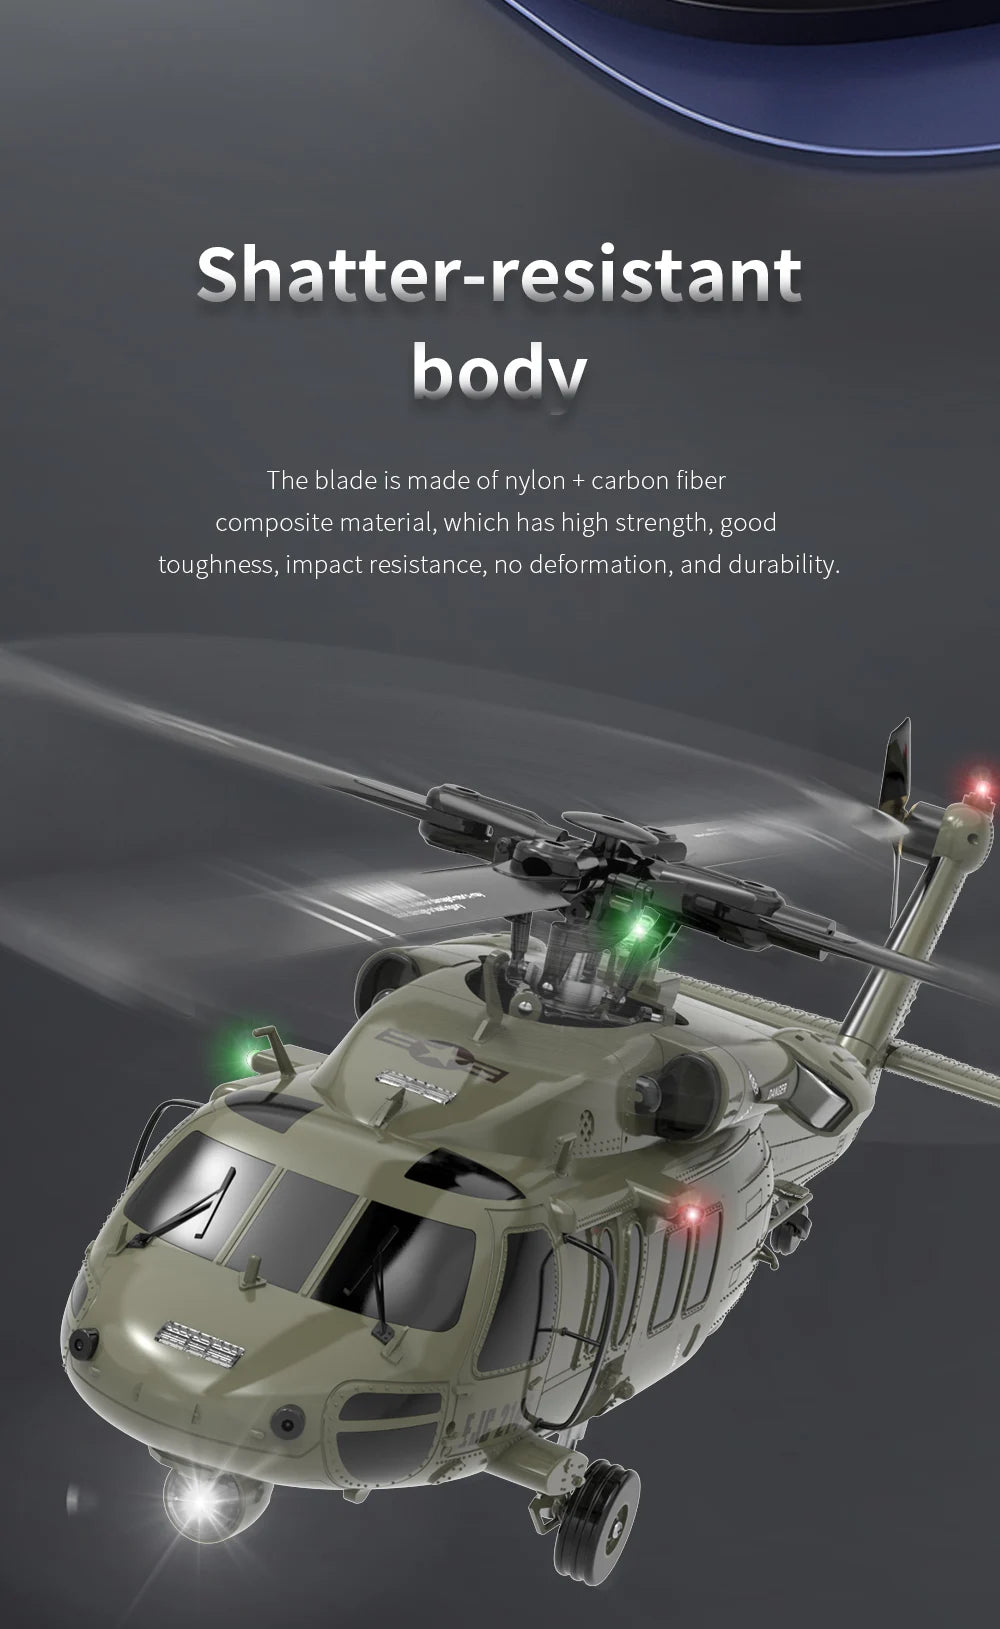 F09 RC Helicopter, nylon + carbon fiber composite material has high strength, good toughness, impact resistance, no de